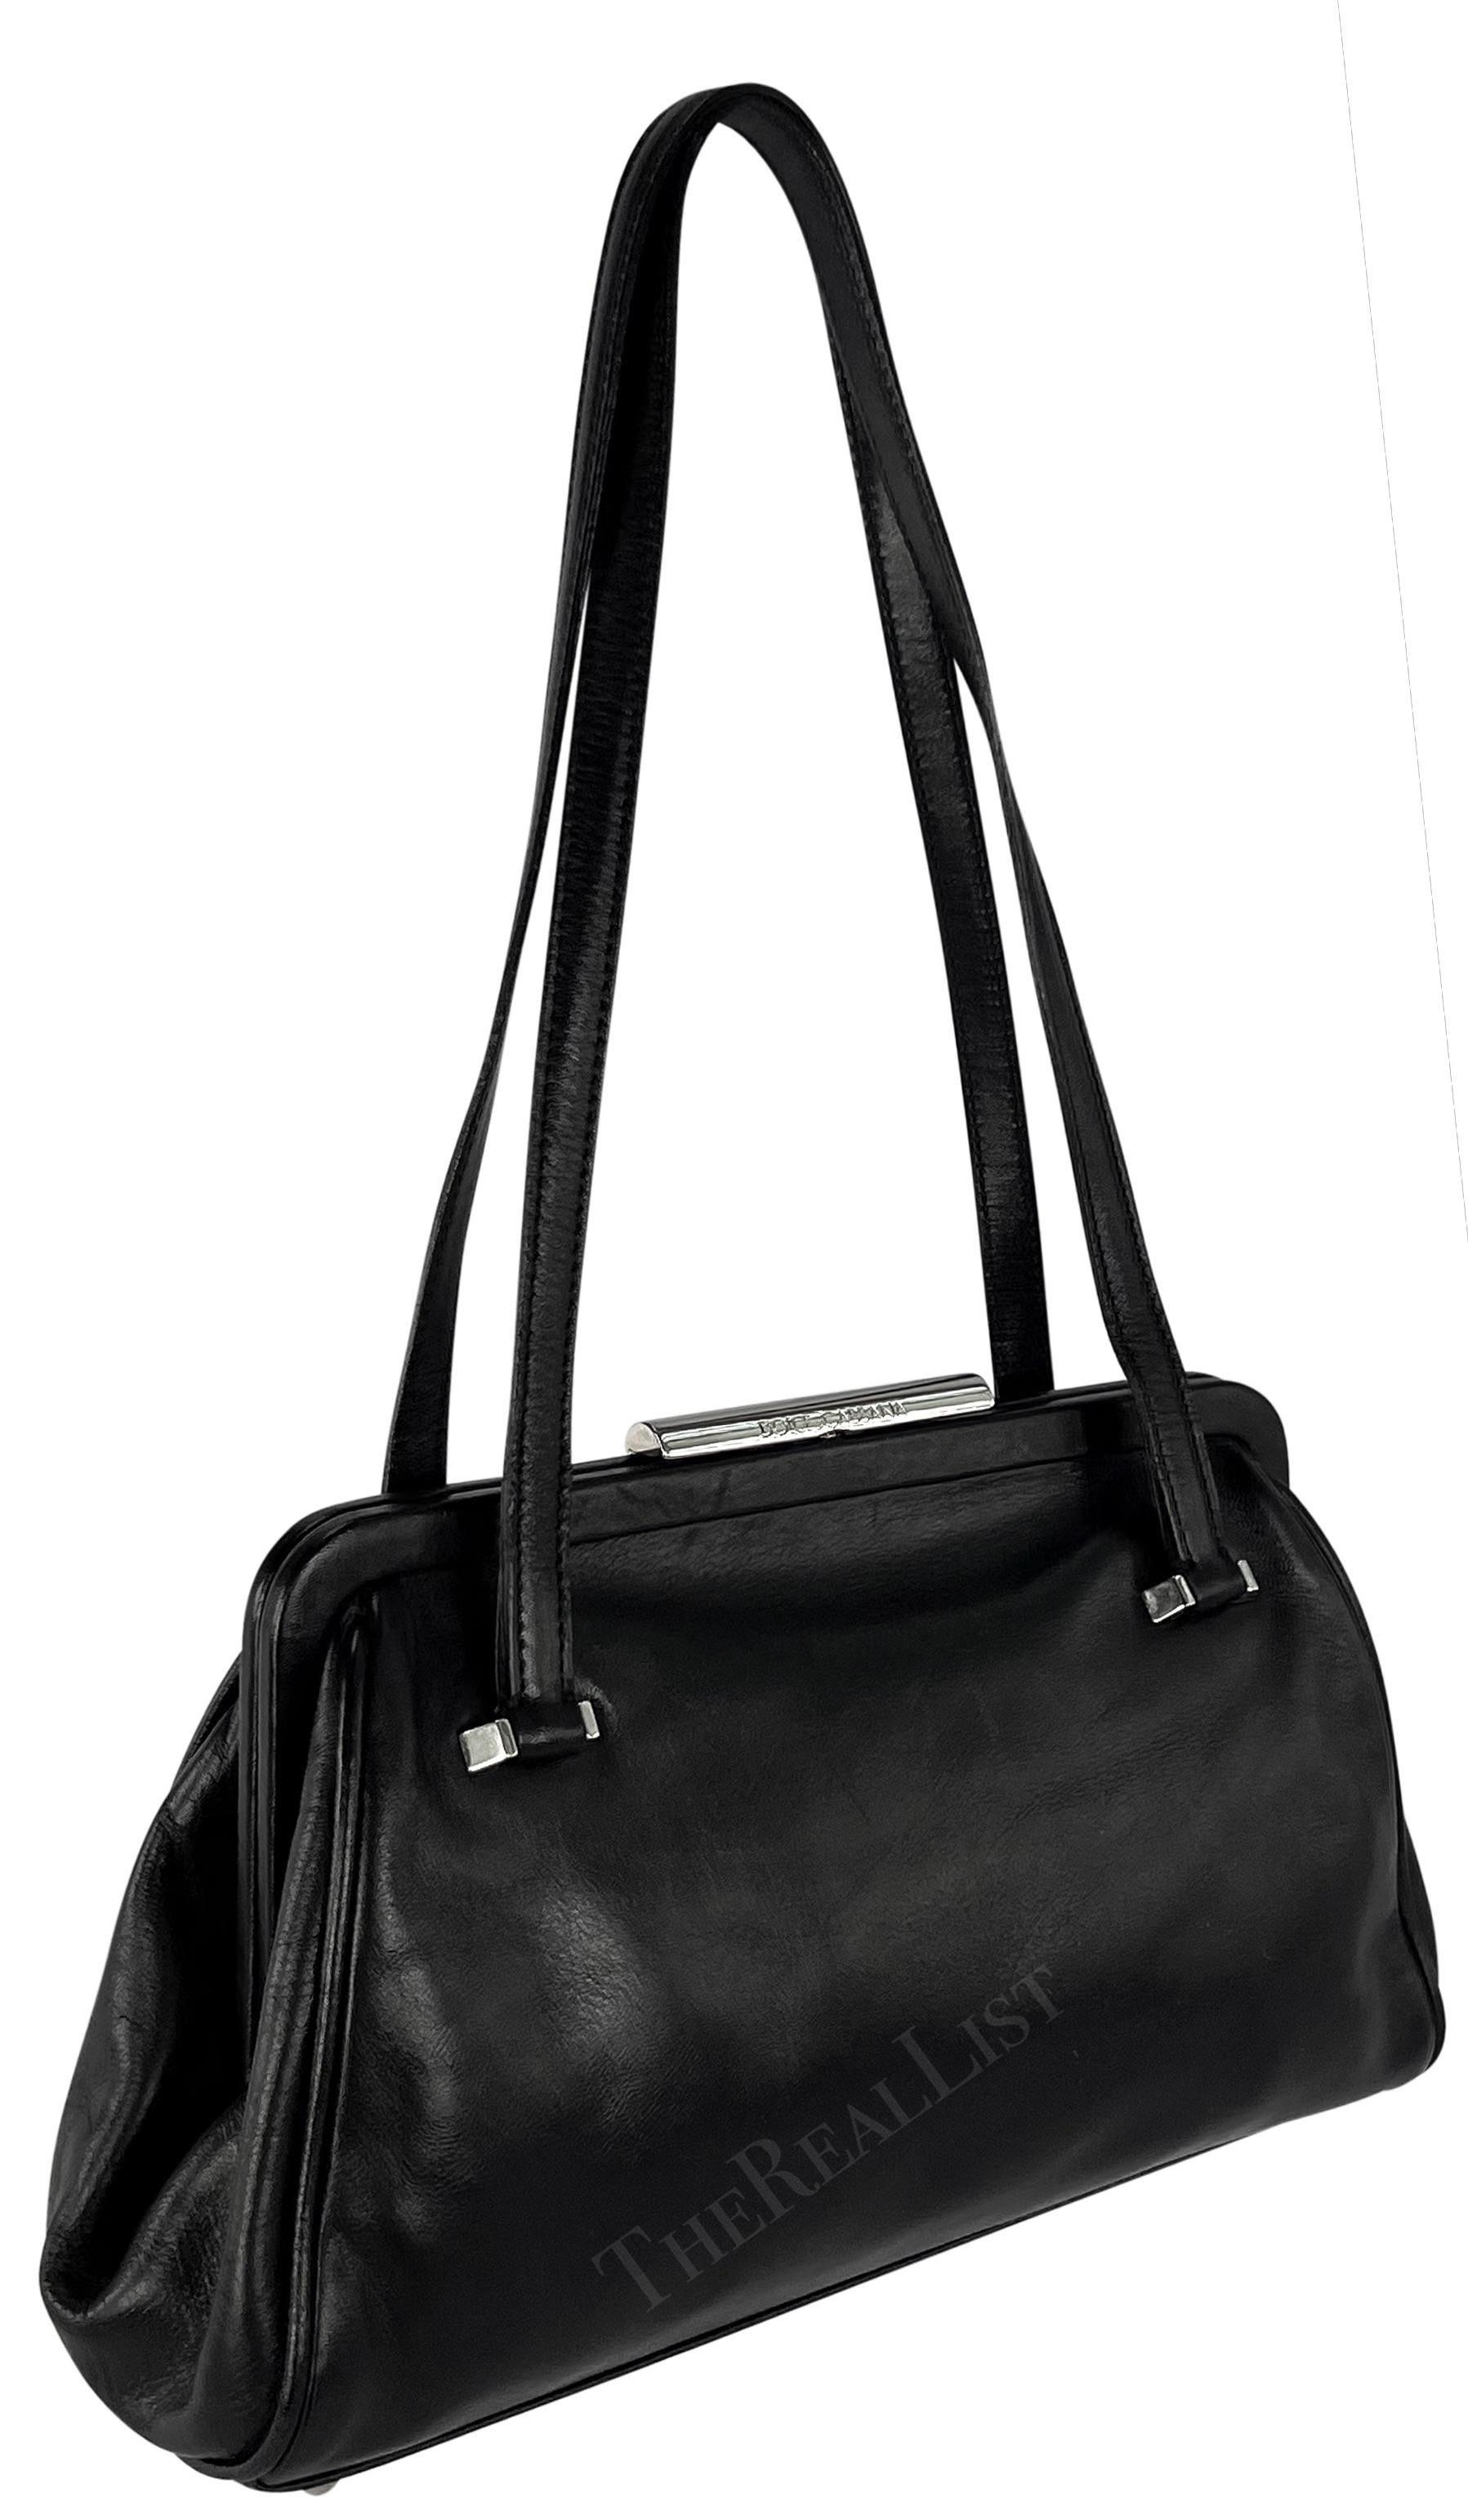 S/S 2003 Dolce & Gabbana 'Sex & Love' Black Leather Mini Shoulder Bag For Sale 5